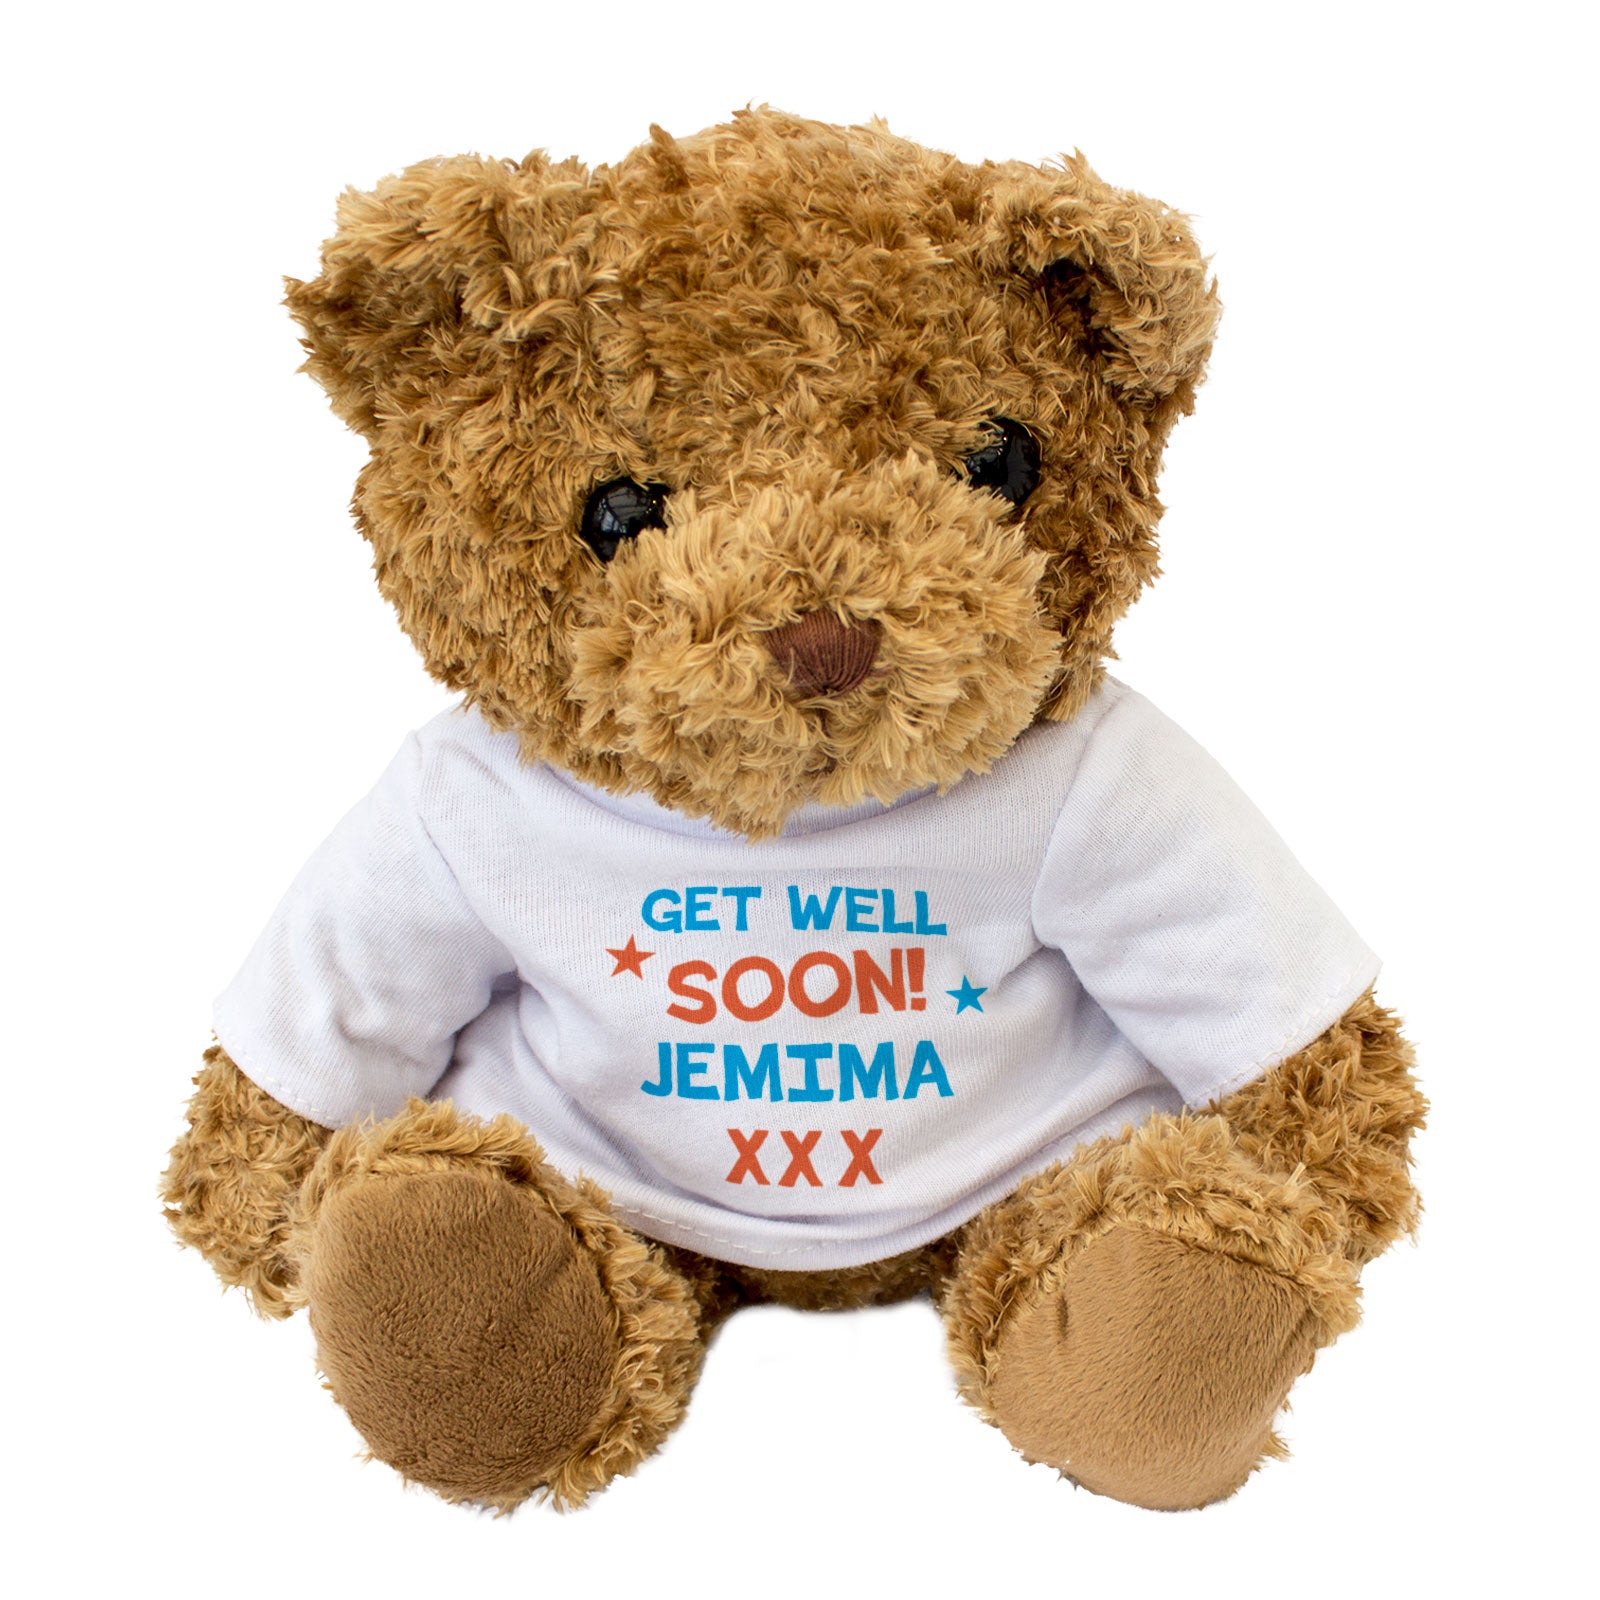 Get Well Soon Jemima - Teddy Bear